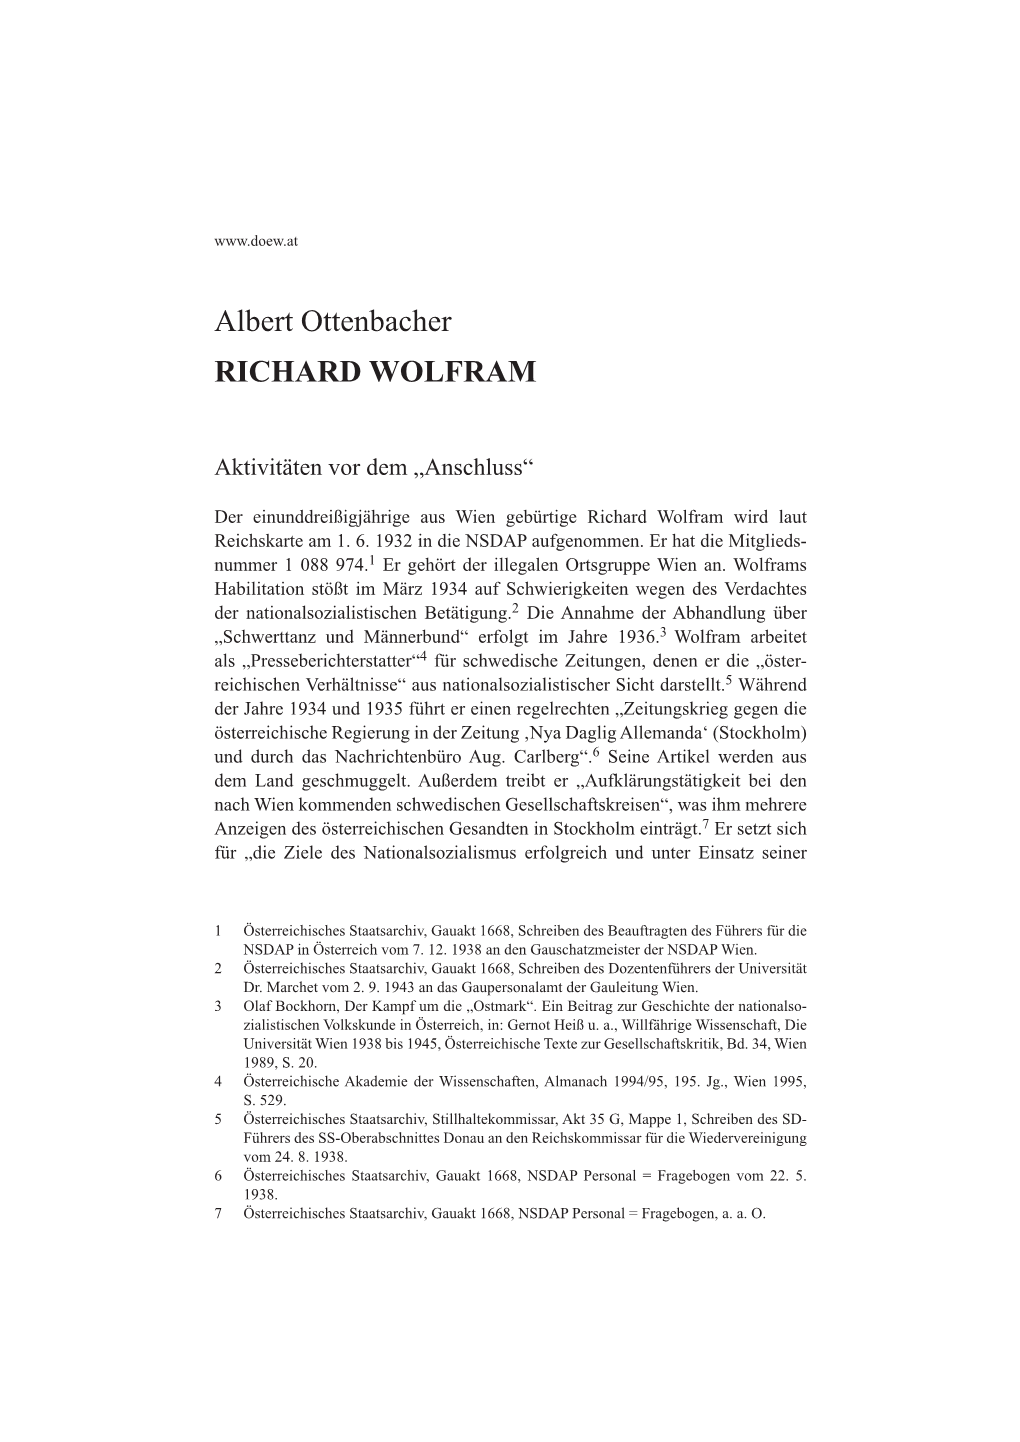 Richard Wolfram